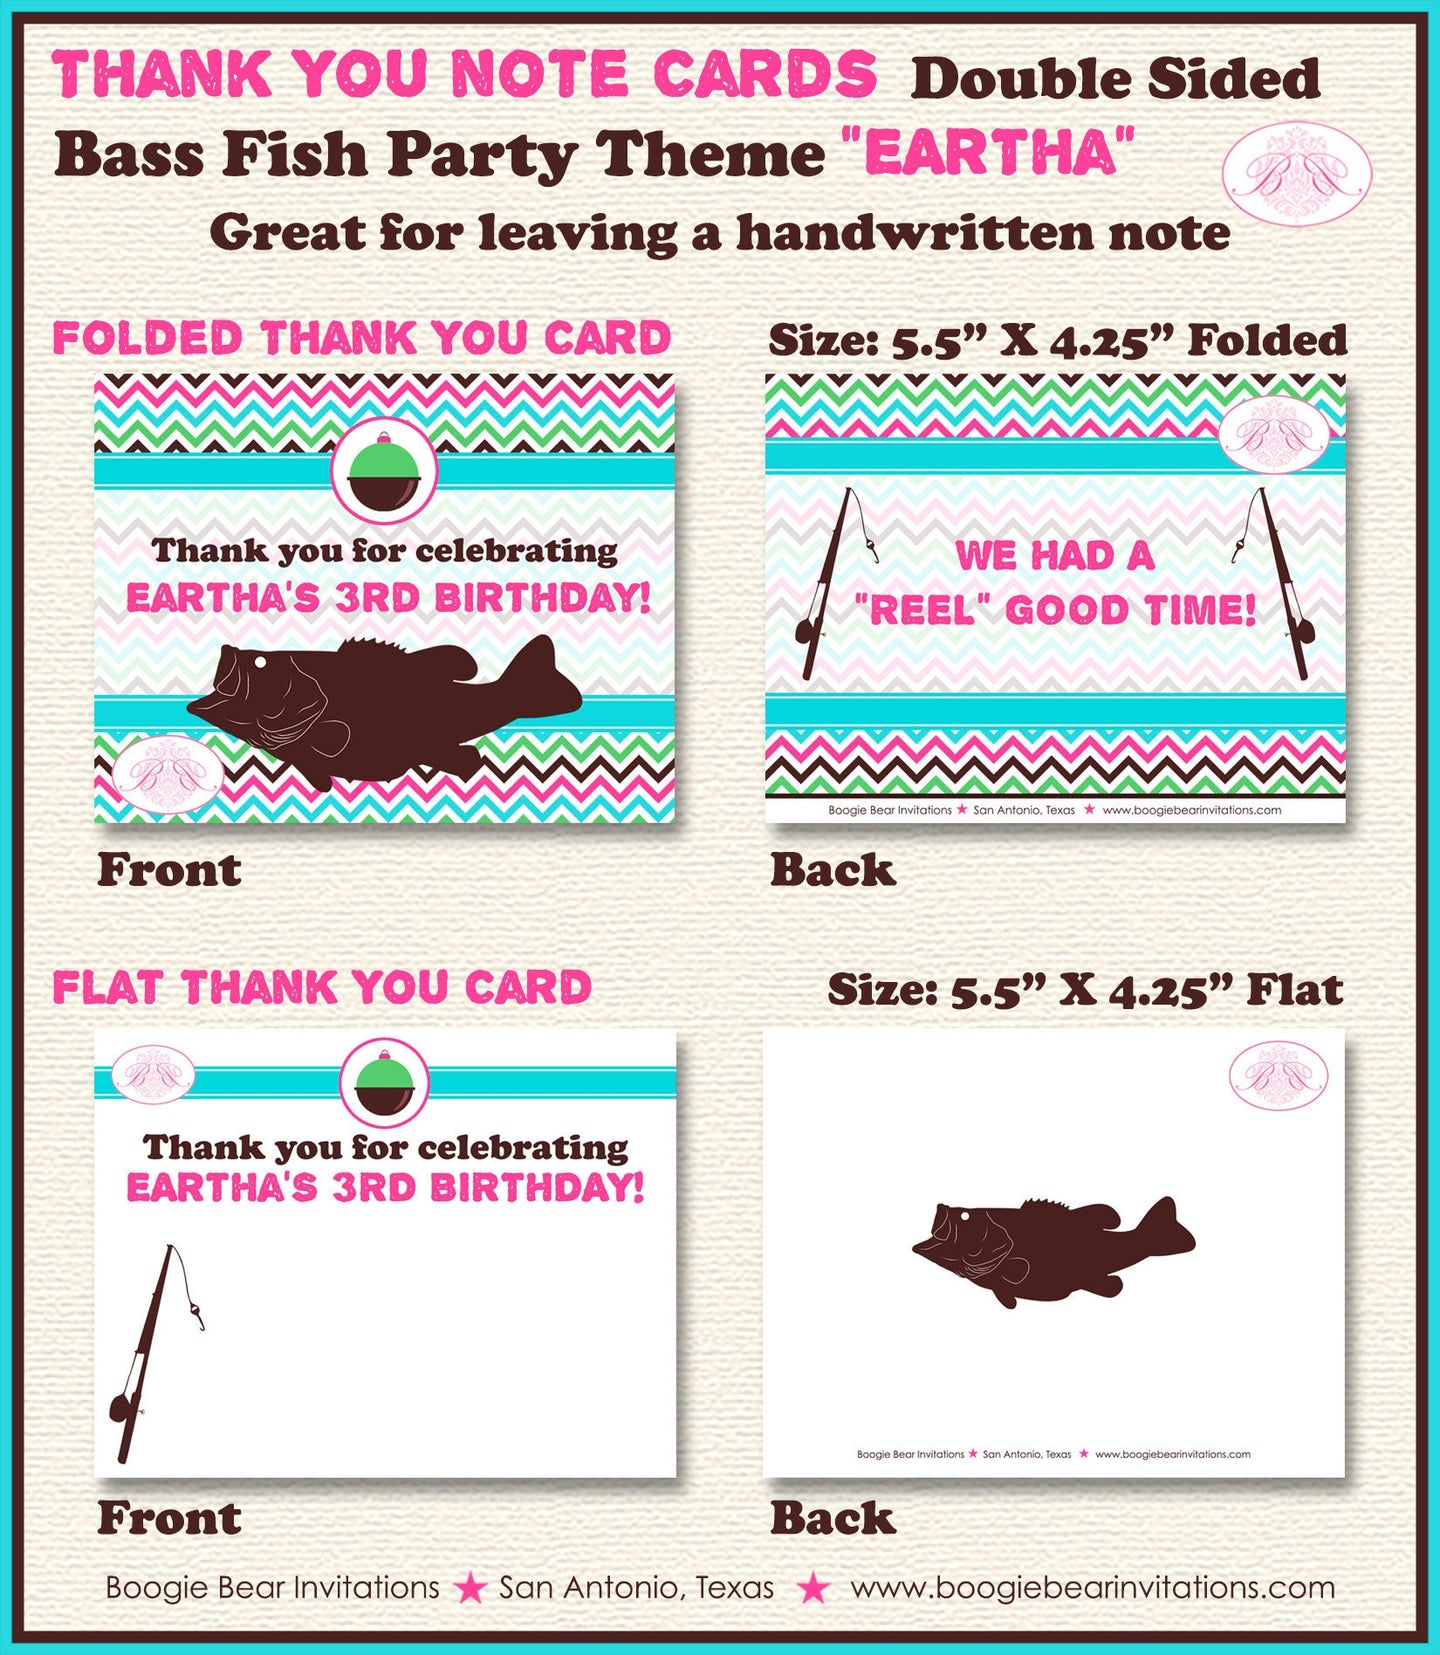 Bass Fish Fishing Birthday Thank You Card Party Girl Pink Green Aqua Blue Pole Rod Reel Fishing Boogie Bear Invitations Eartha Theme Printed